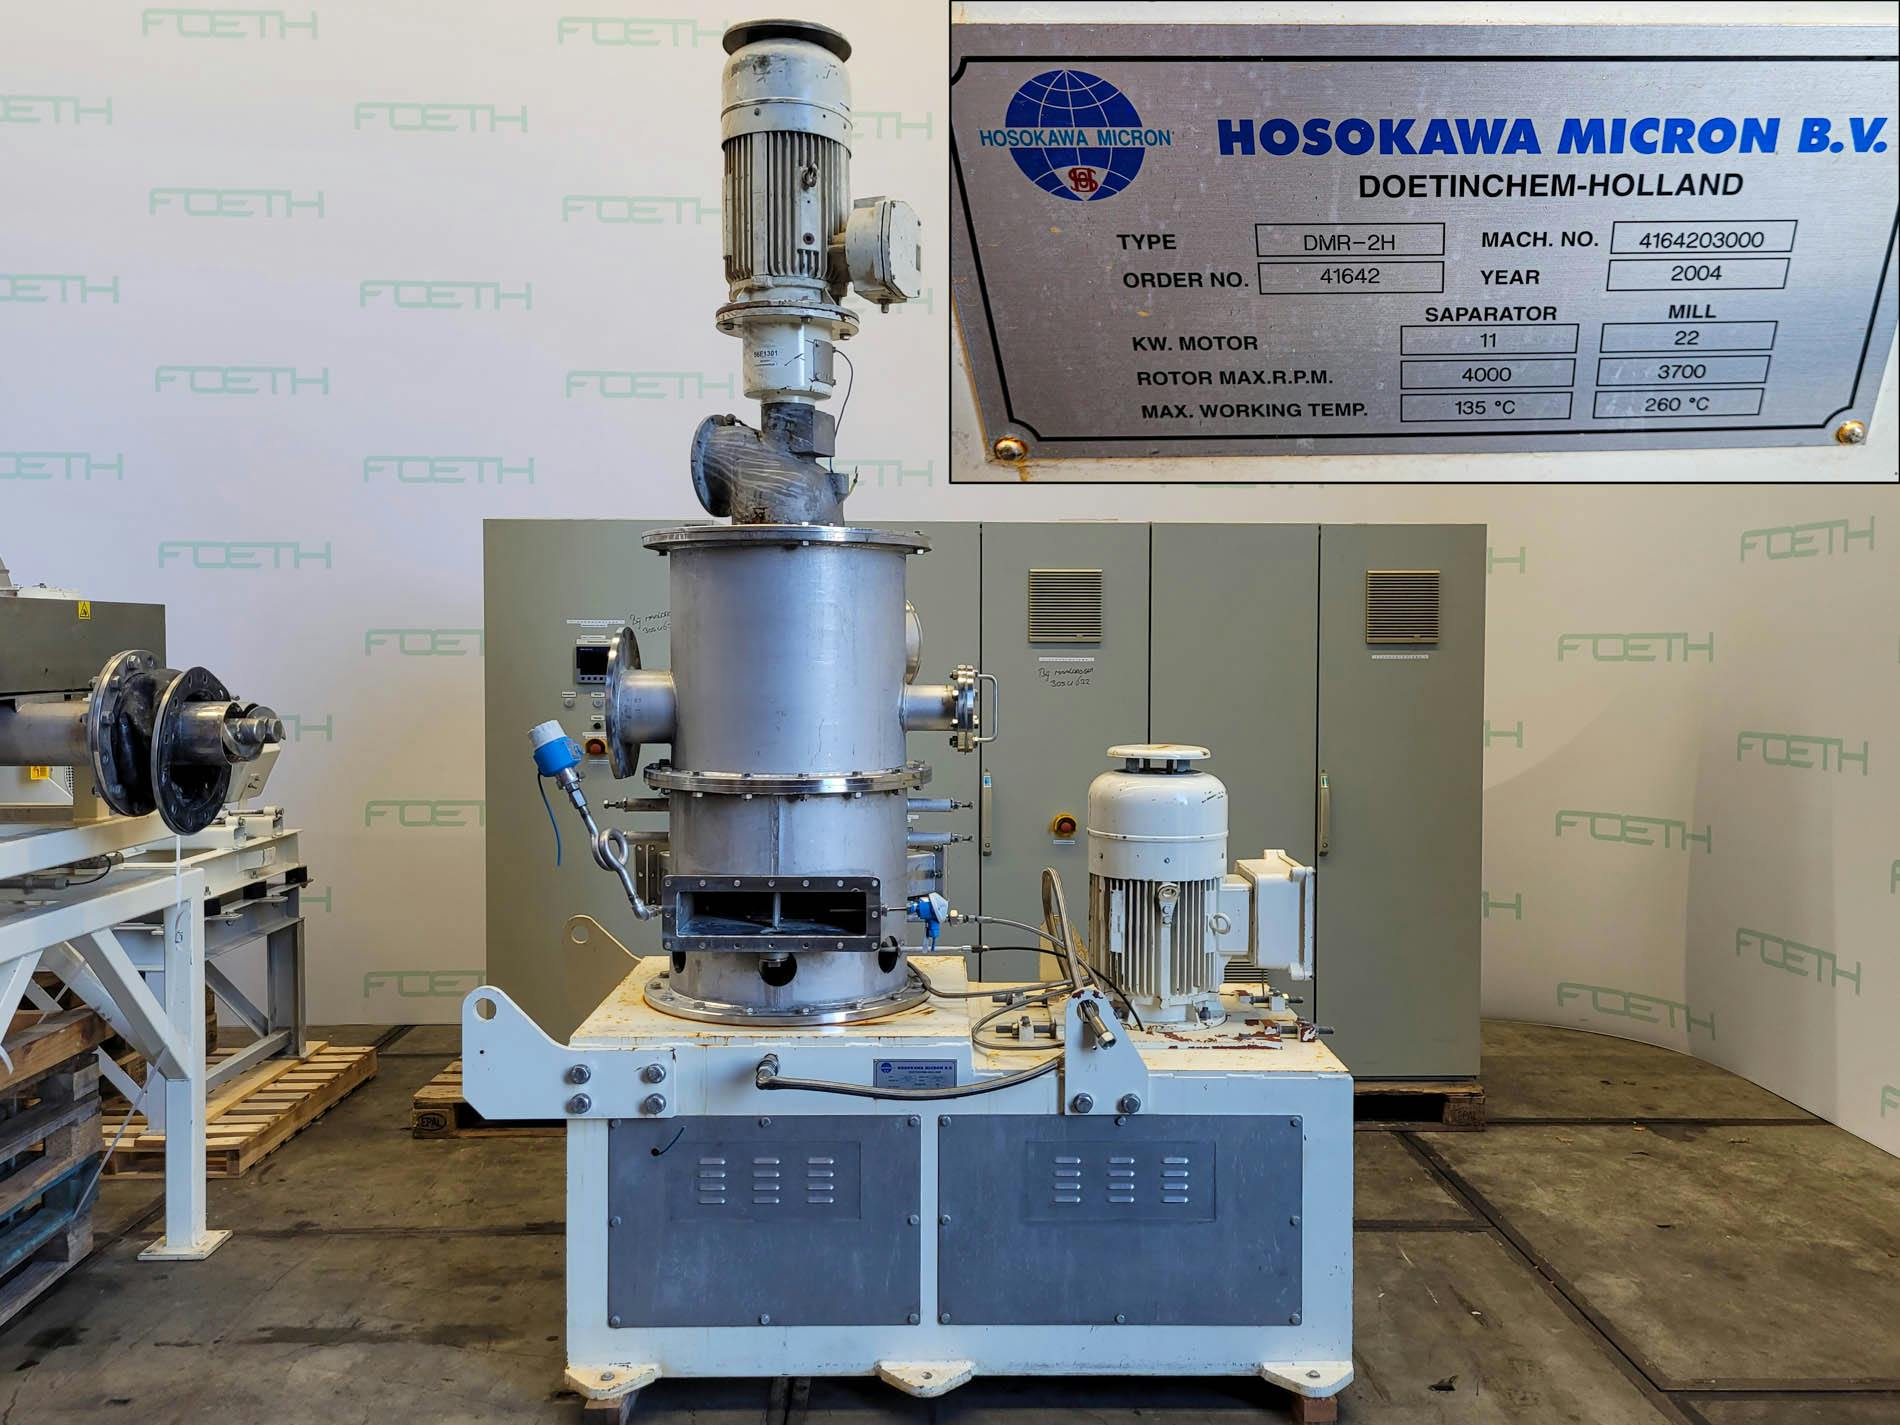 Hosokawa Micron DMR-2H FLASH-DROGER - Drying system - Continu droger - image 4